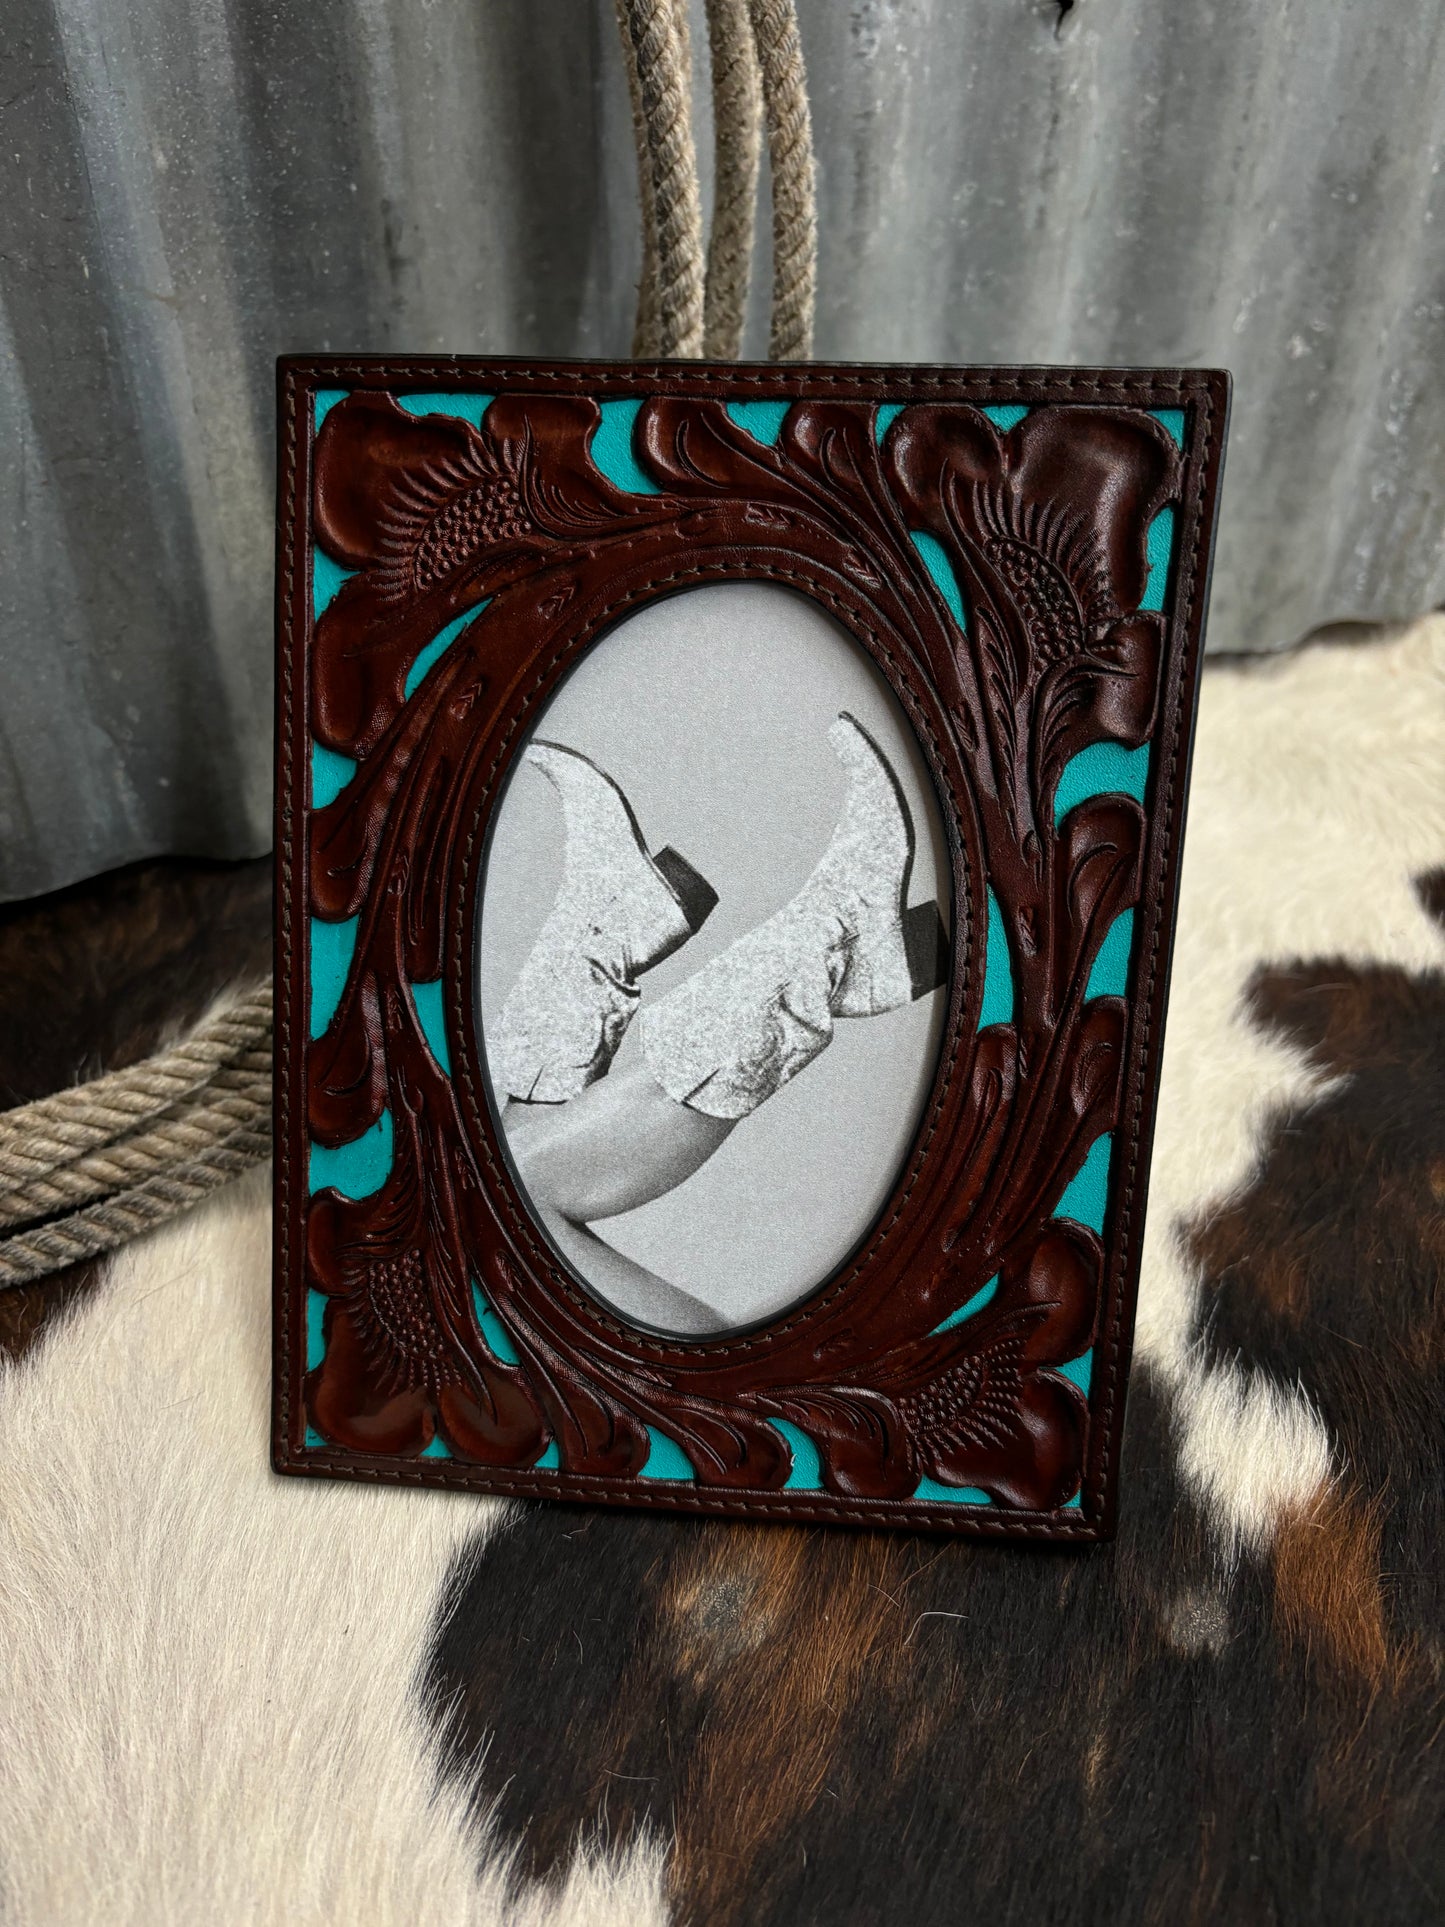 The Tooled Leather Turquoise Medium Frame